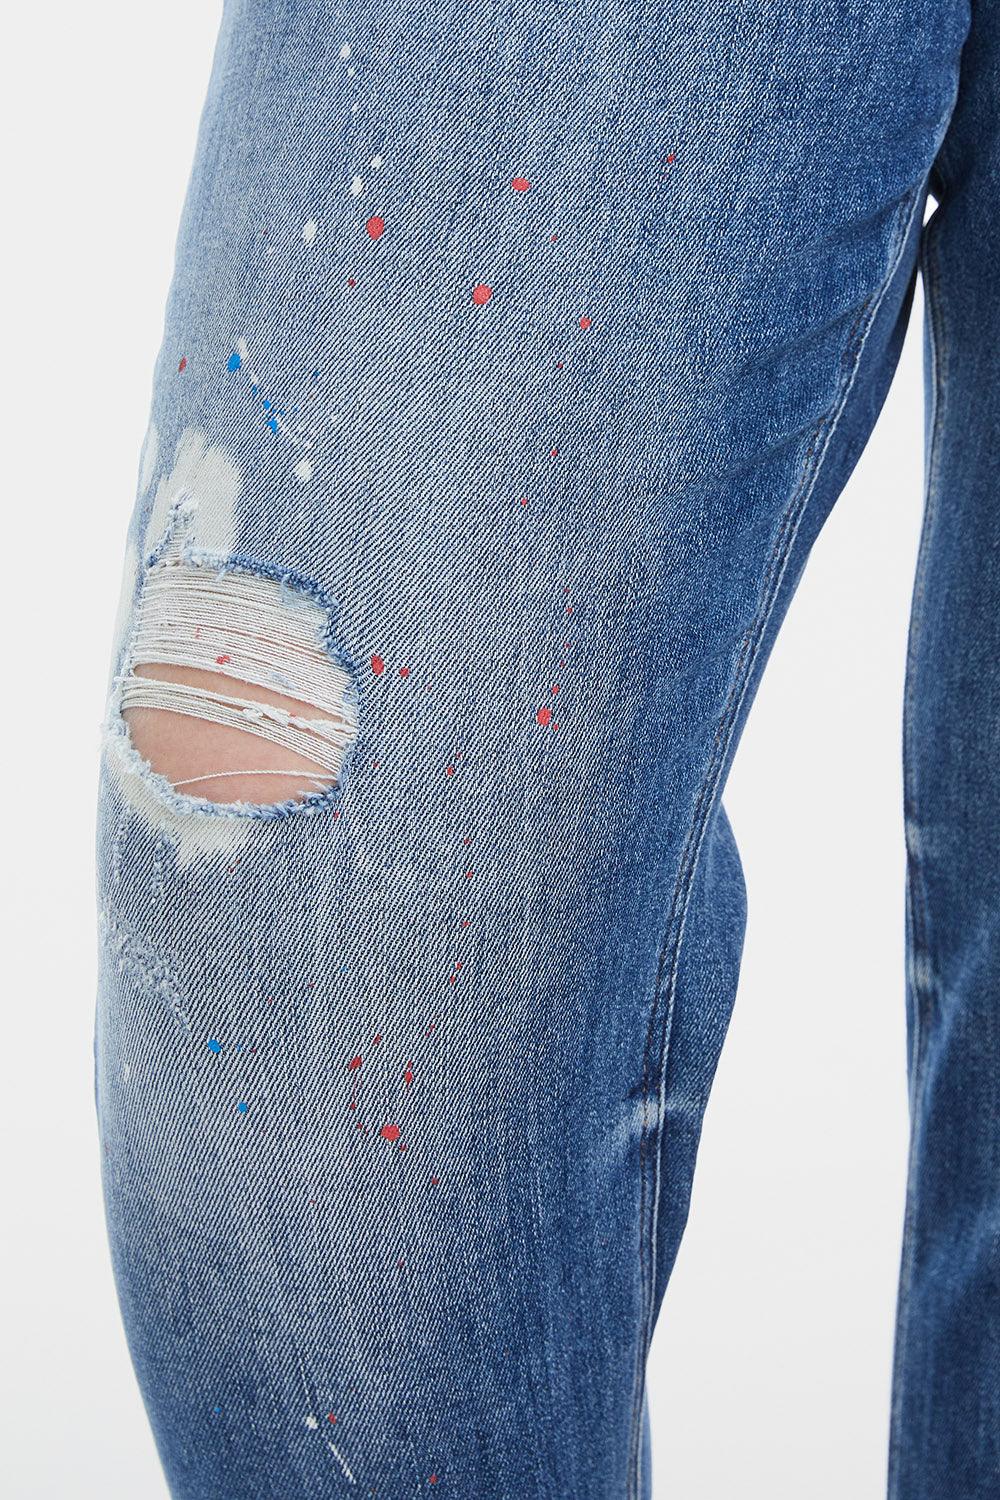 BAYEAS Full Size High Waist Distressed Paint Splatter Pattern Jeans - Fashionista Fusion 